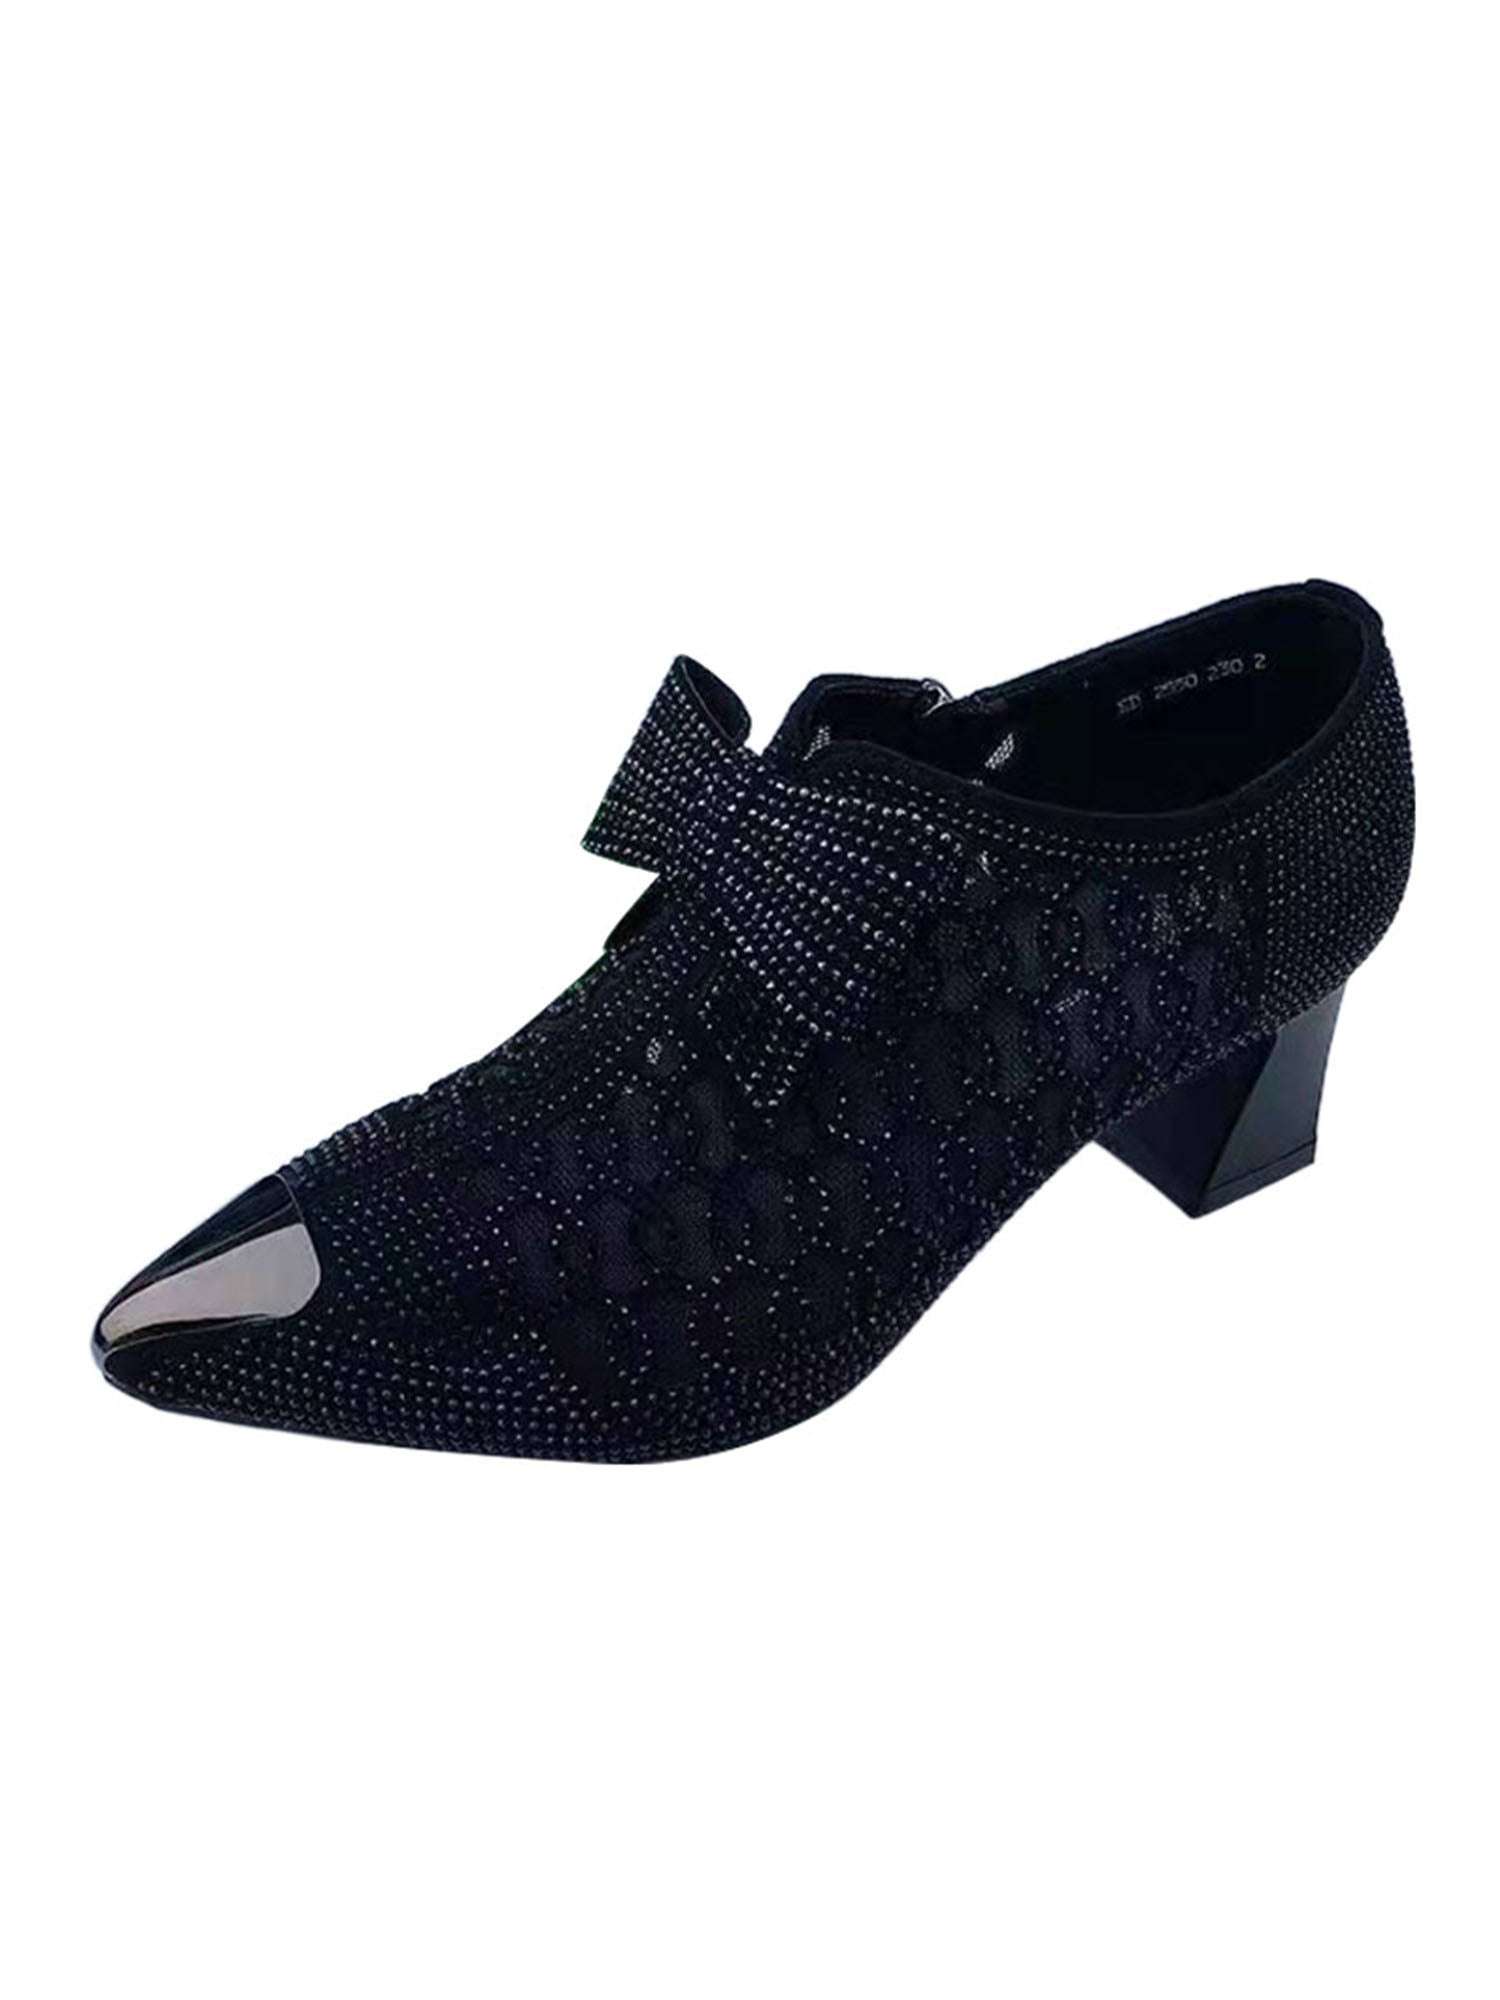 Ritualay Black Closed Toe Heels Women Comfort Dress Pump Shoes Wide Width  Chunky Block Heel Party Dress Shoes Black 8 